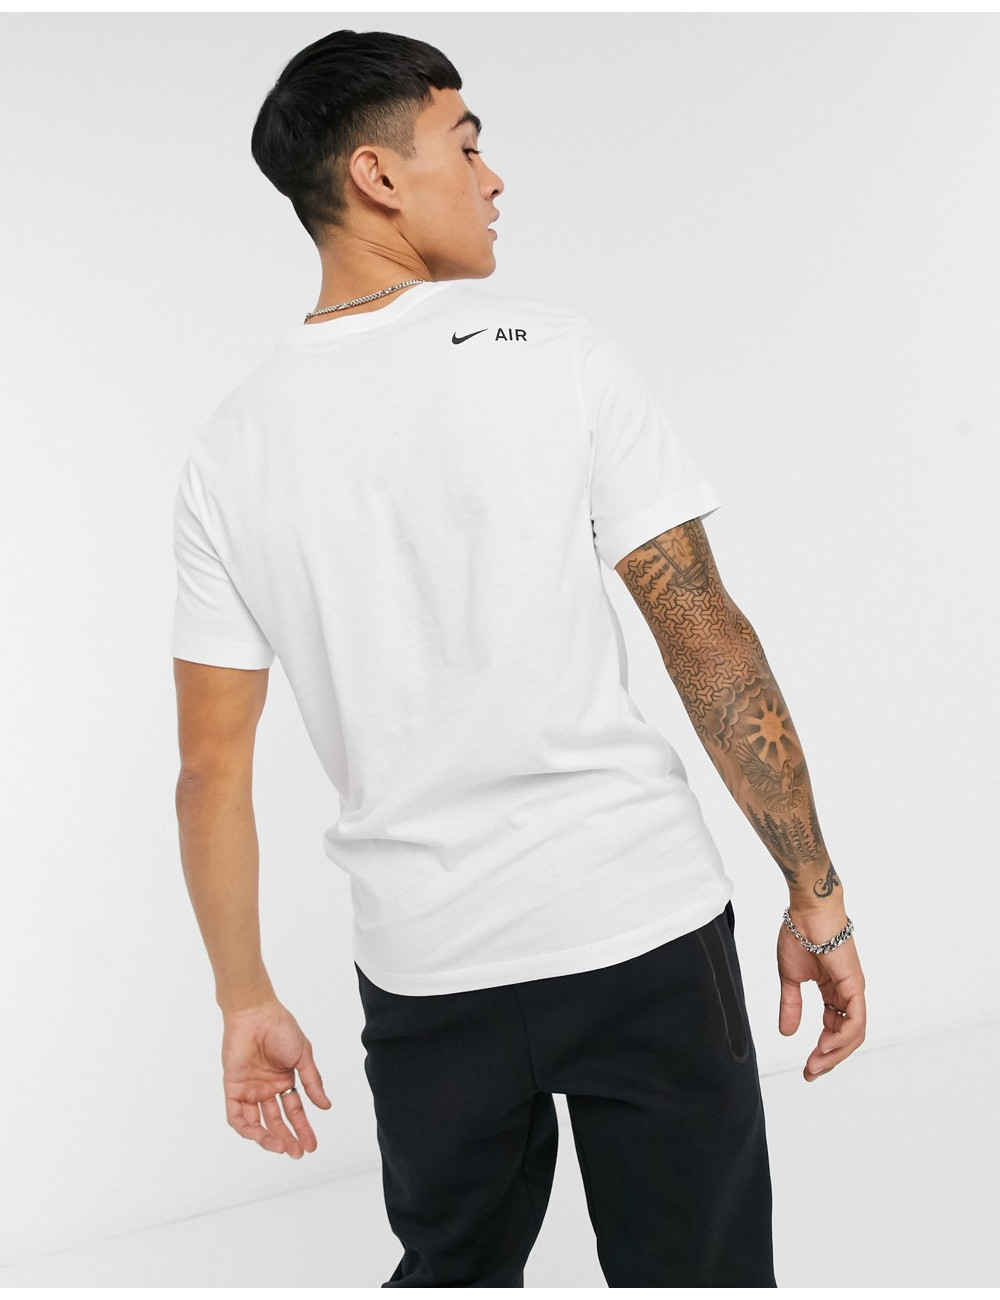 Nike Air Print Pack t-shirt...